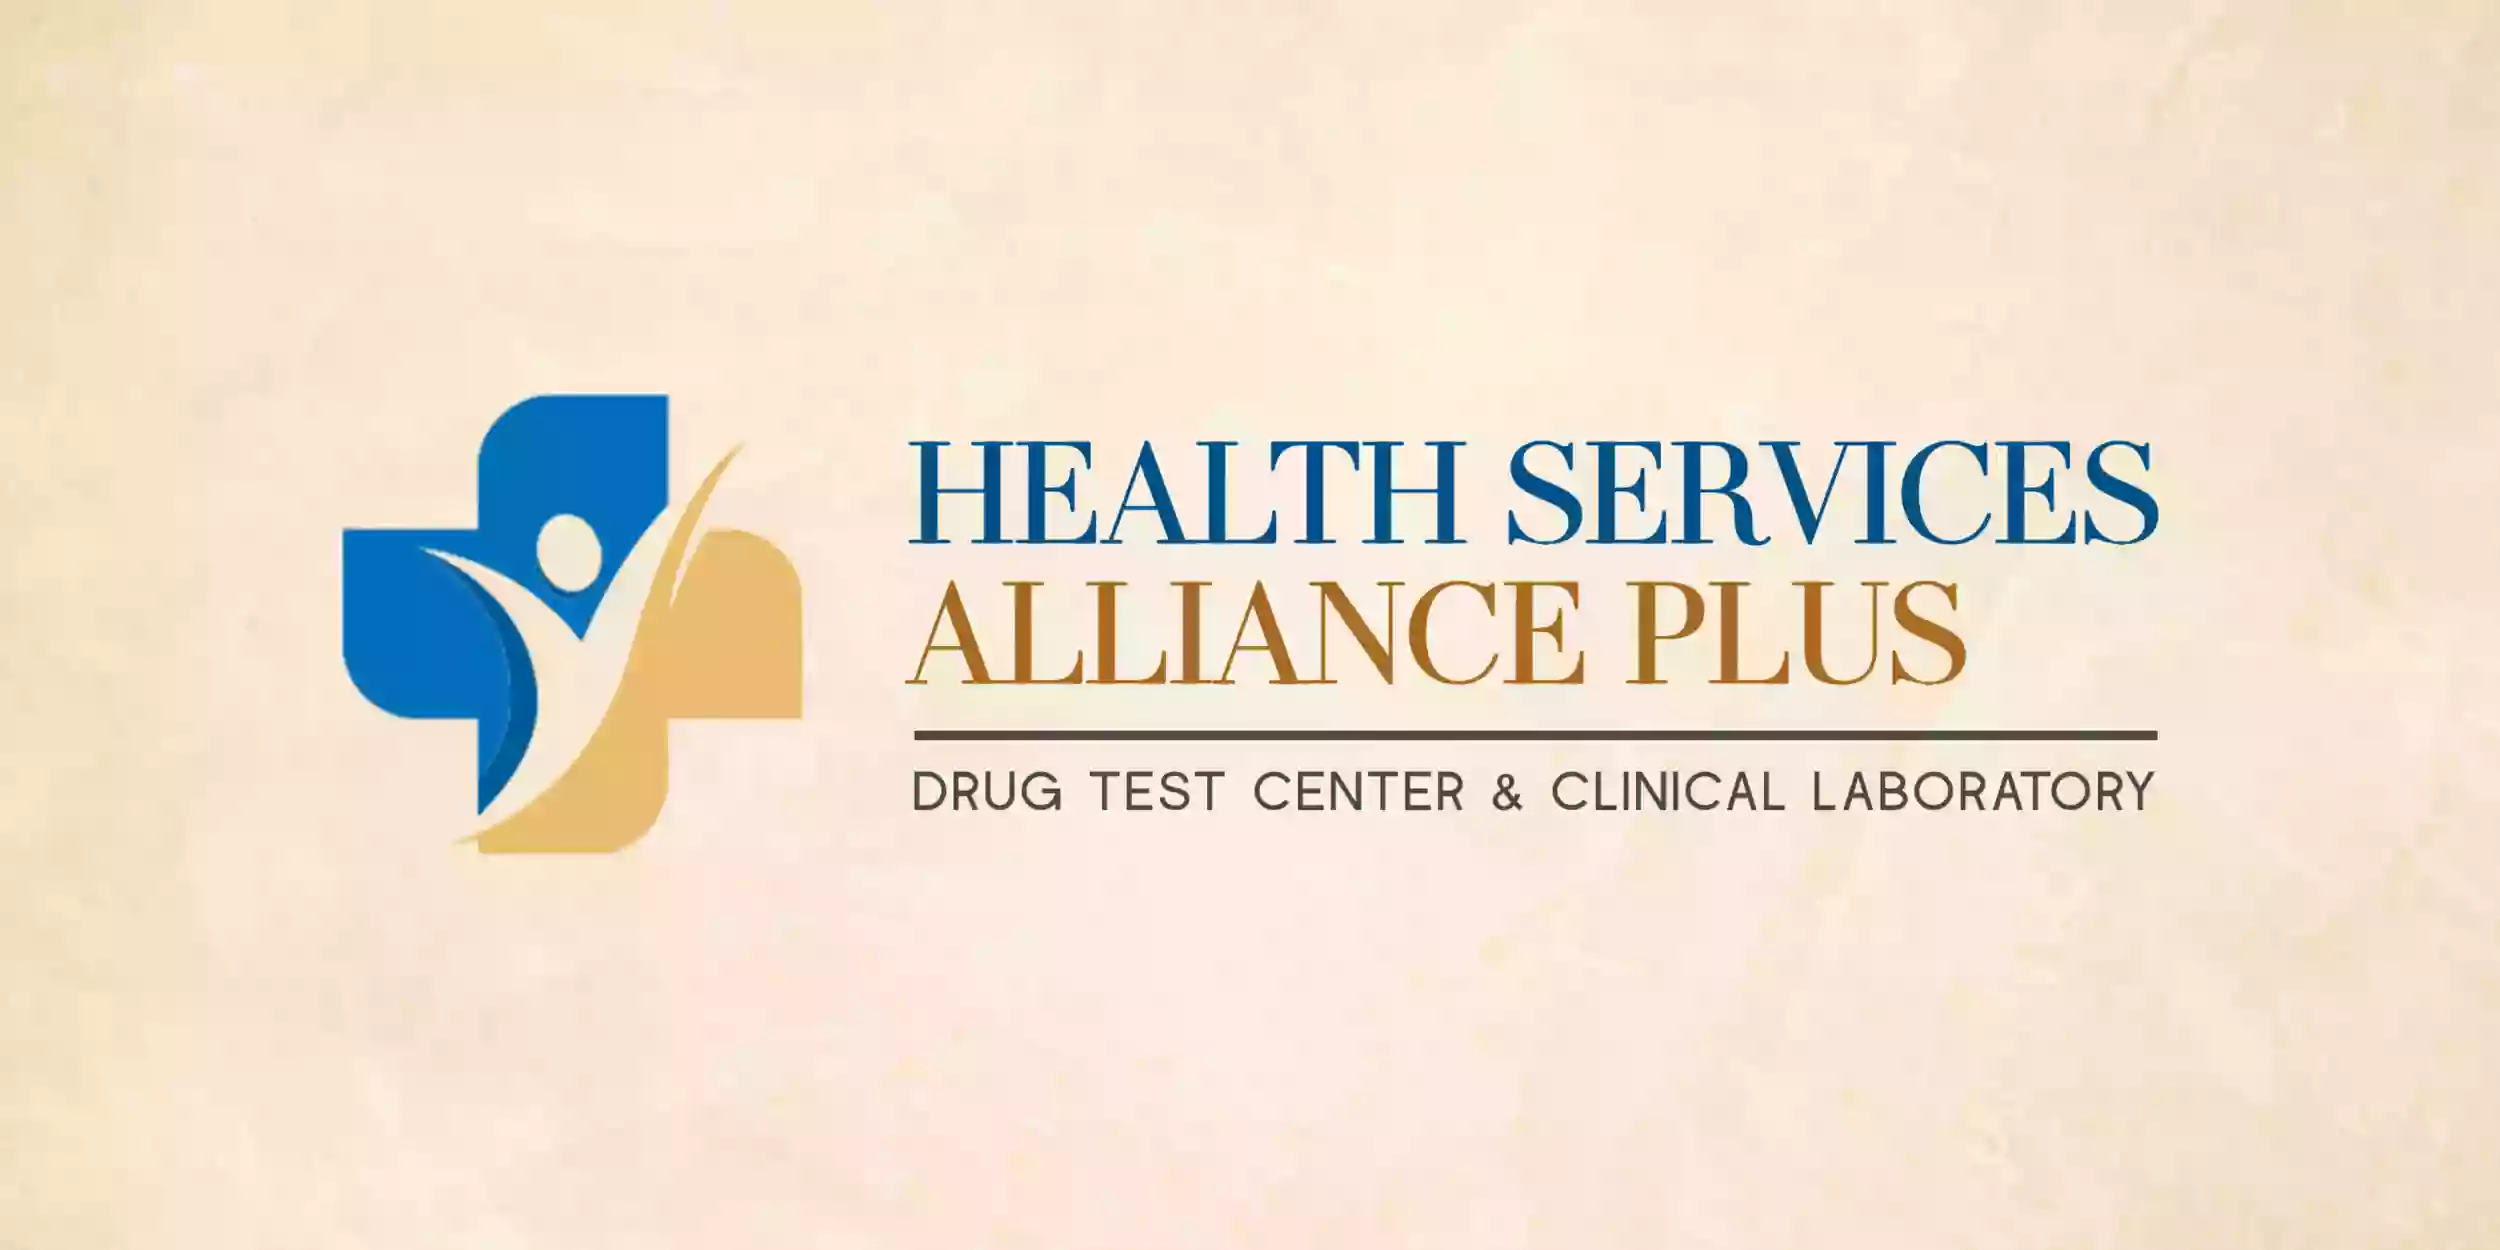 Health Services Alliance Plus